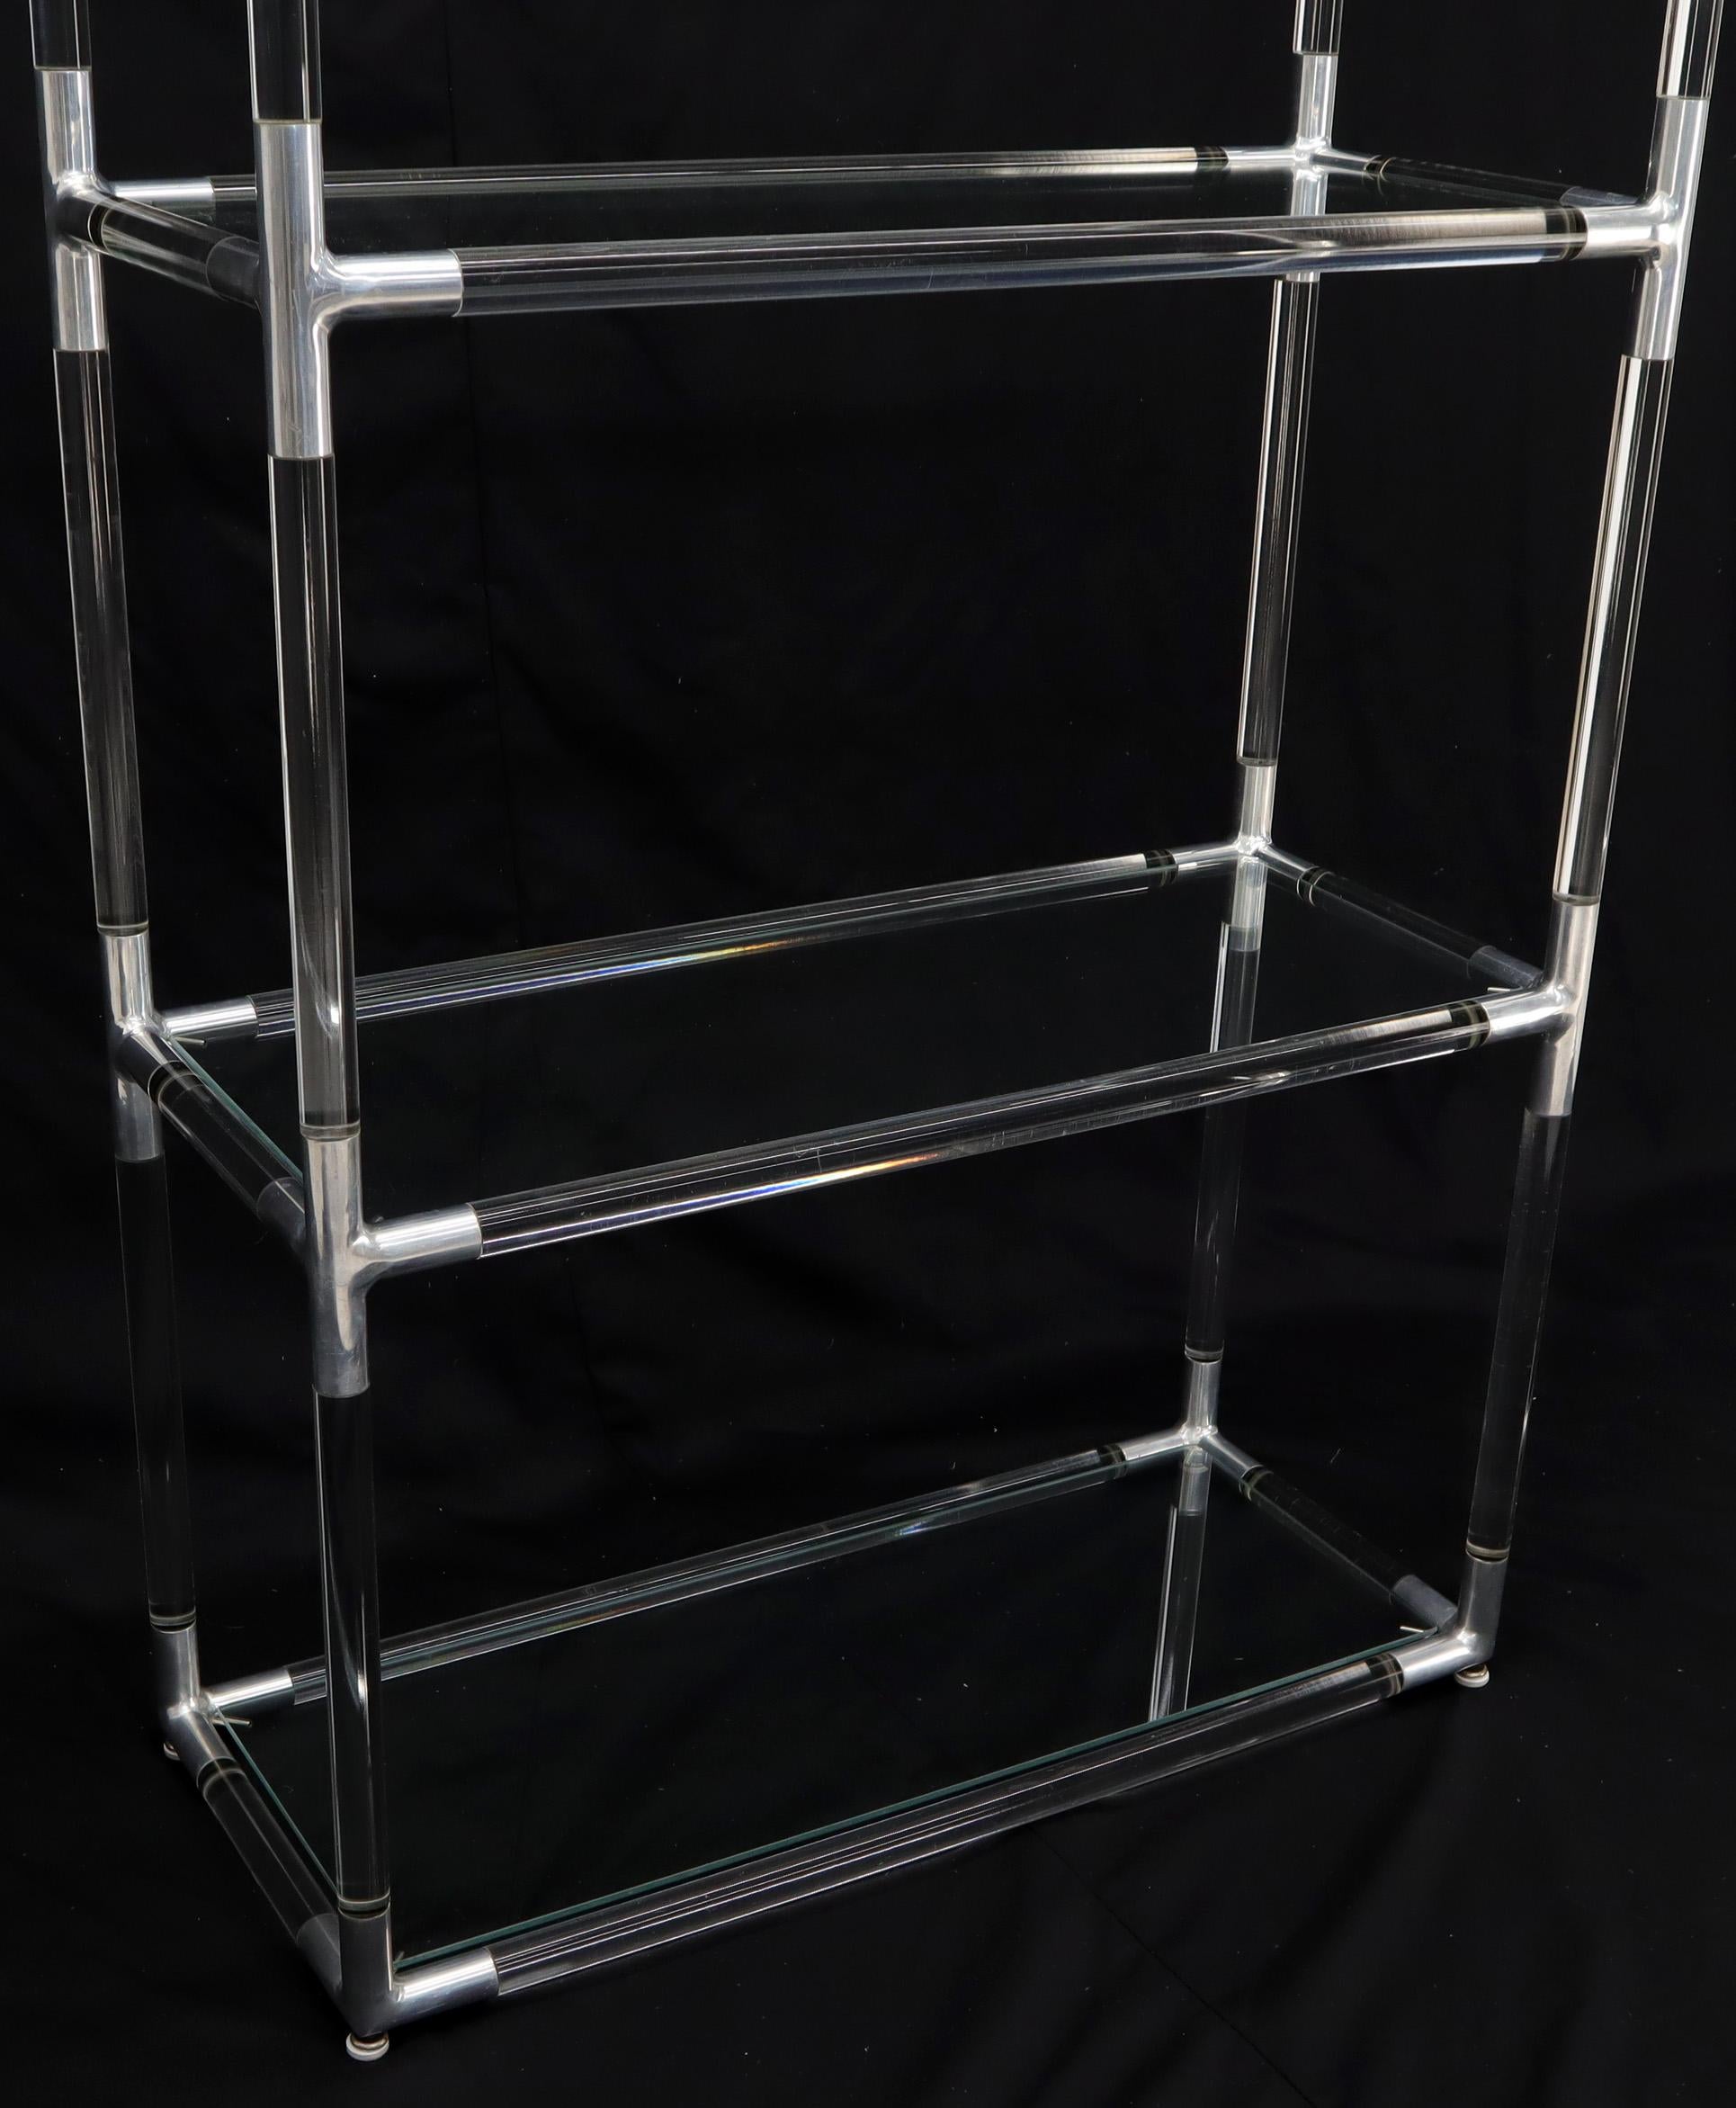 5 tier glass shelving unit